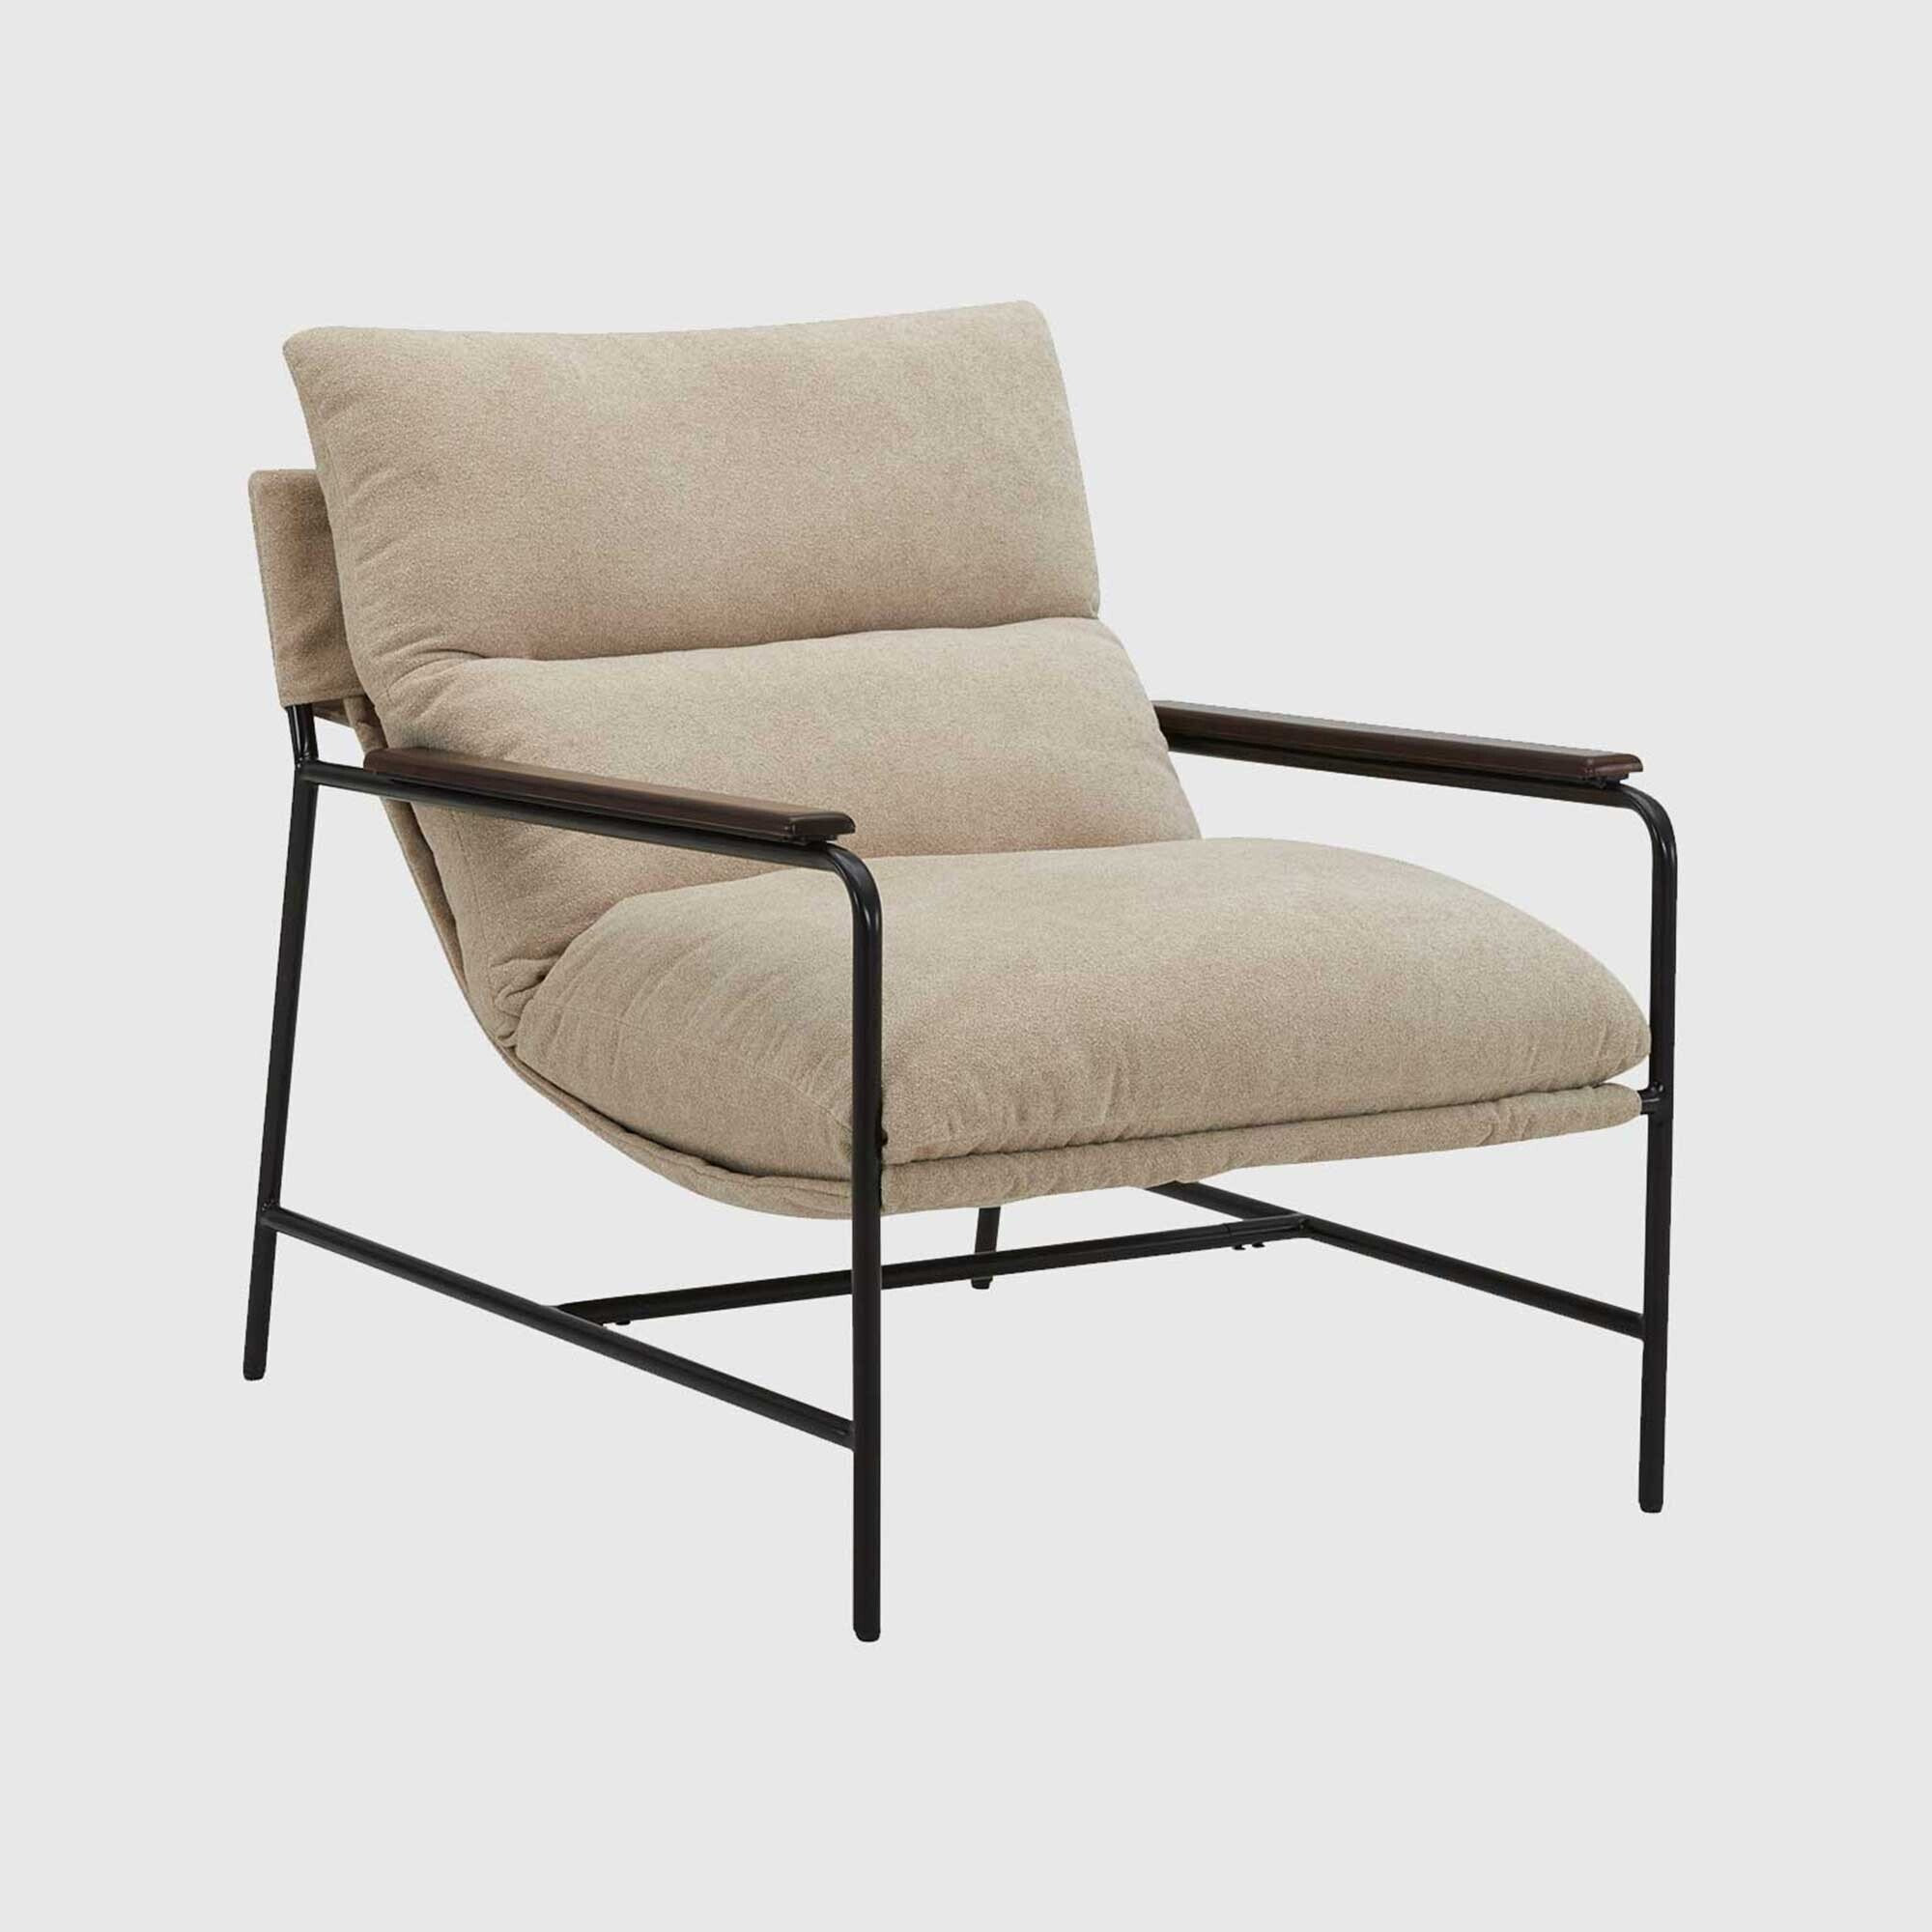 Keele Armchair, Neutral Fabric - Barker & Stonehouse - image 1